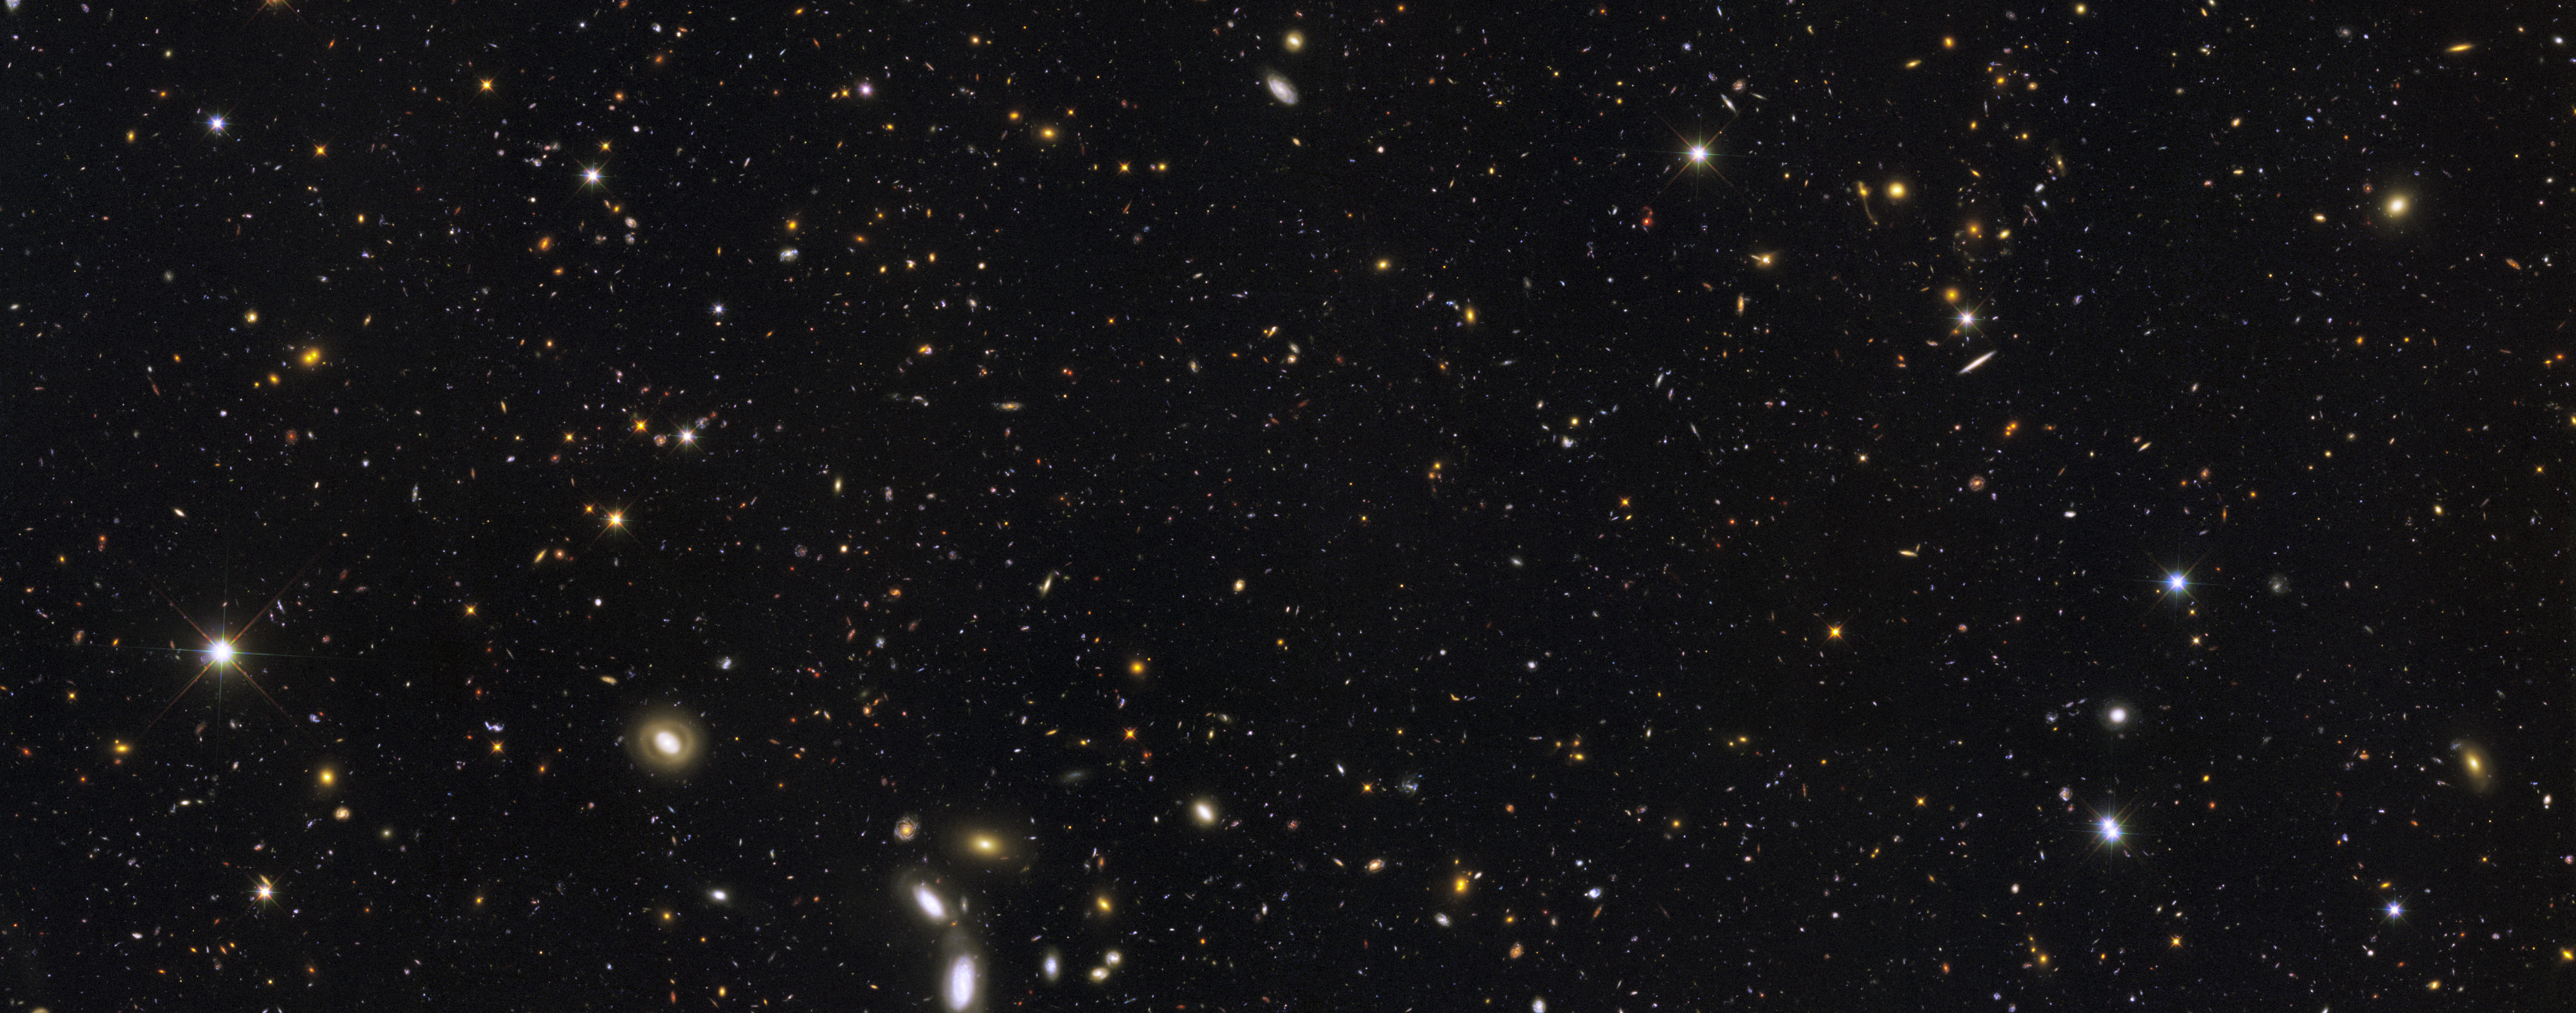 Space Galaxy Stars 3440x1353